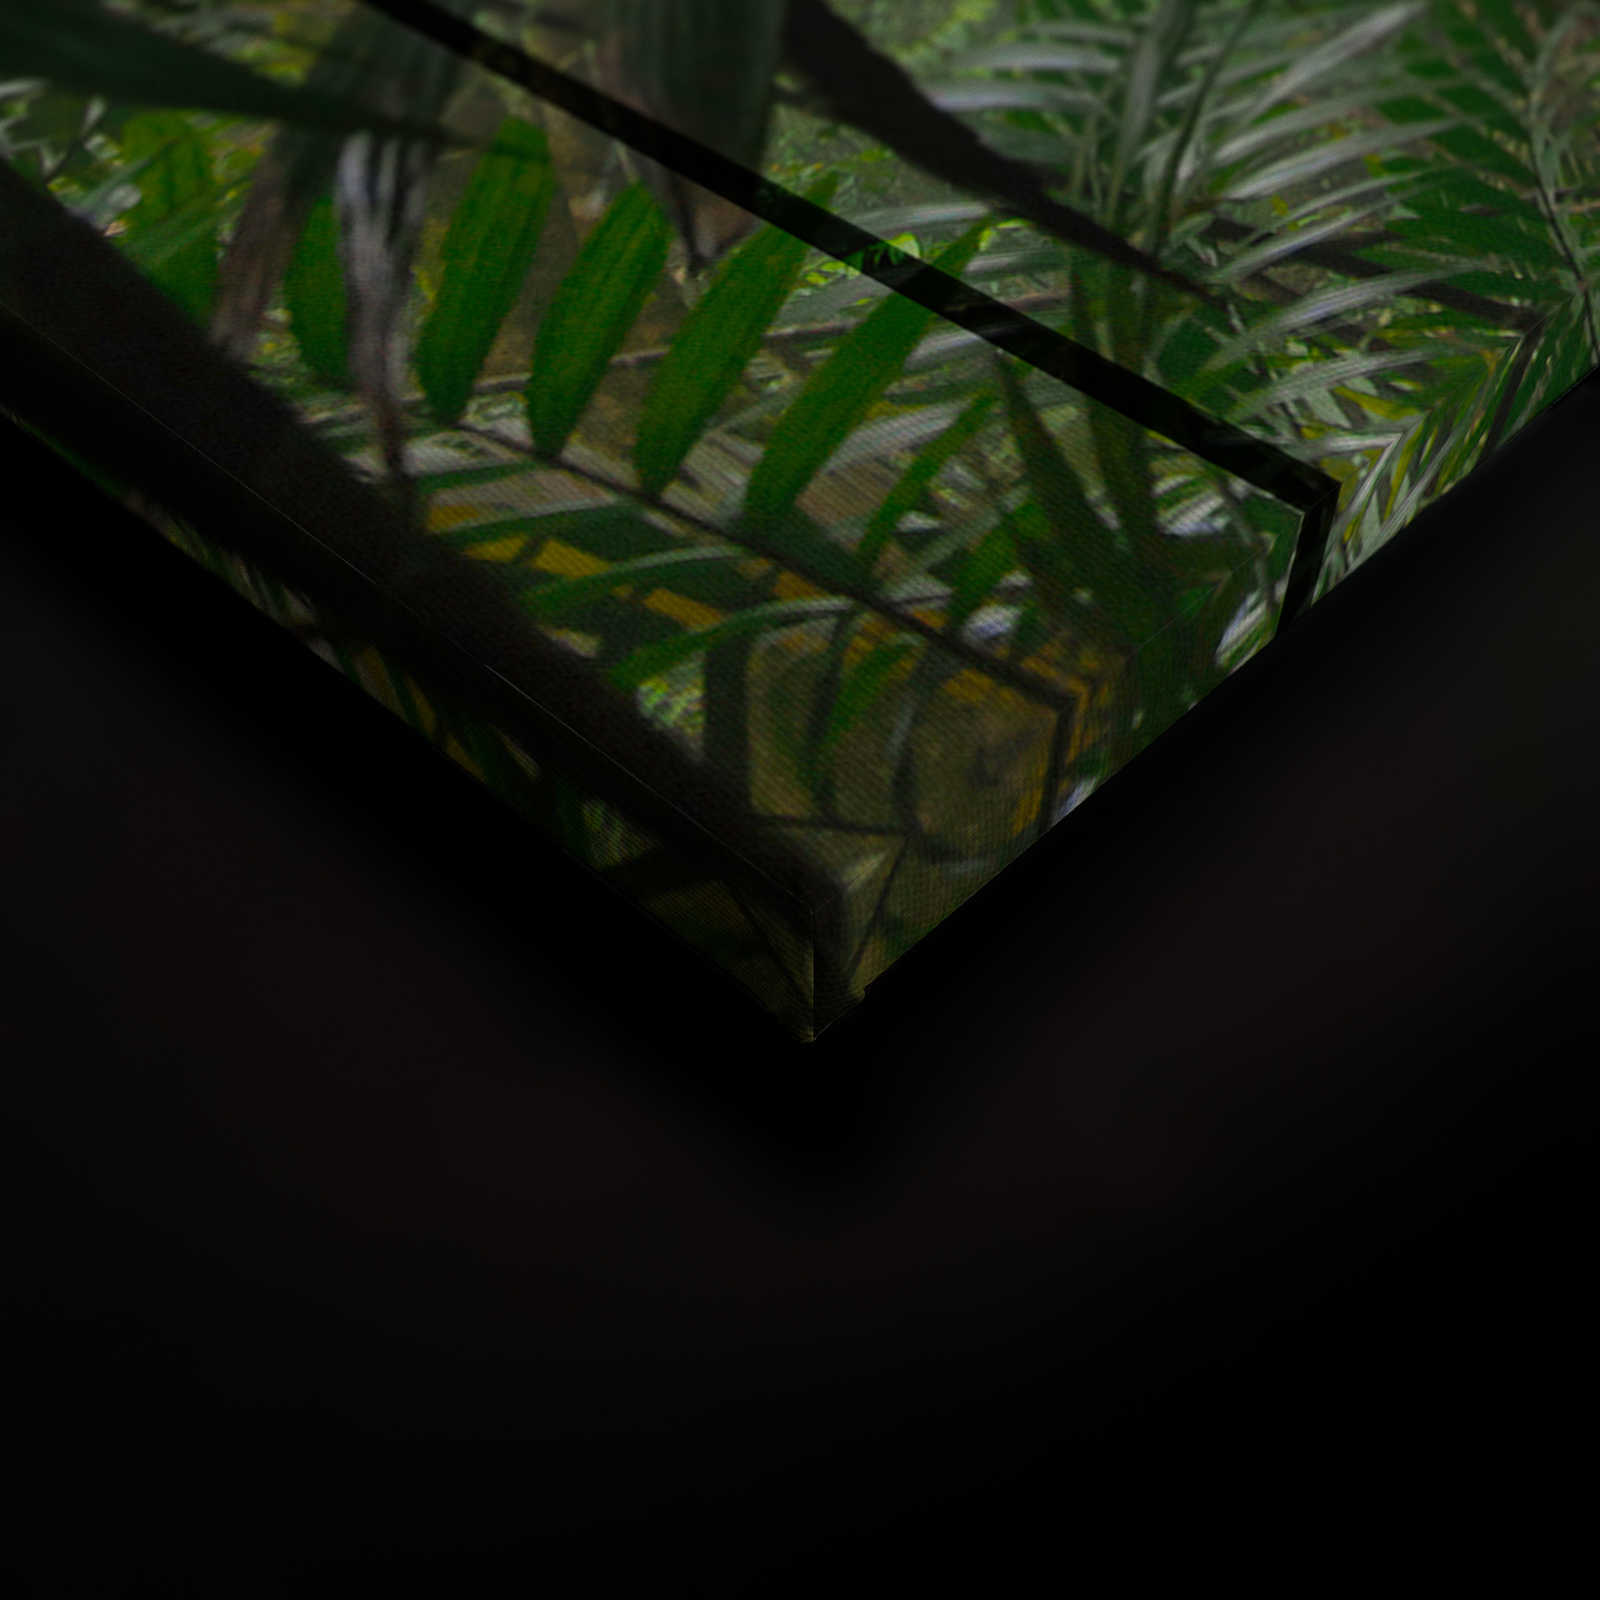             Rainforest 1 - Pintura sobre lienzo con vista a la selva desde la ventana del desván - 0,90 m x 0,60 m
        